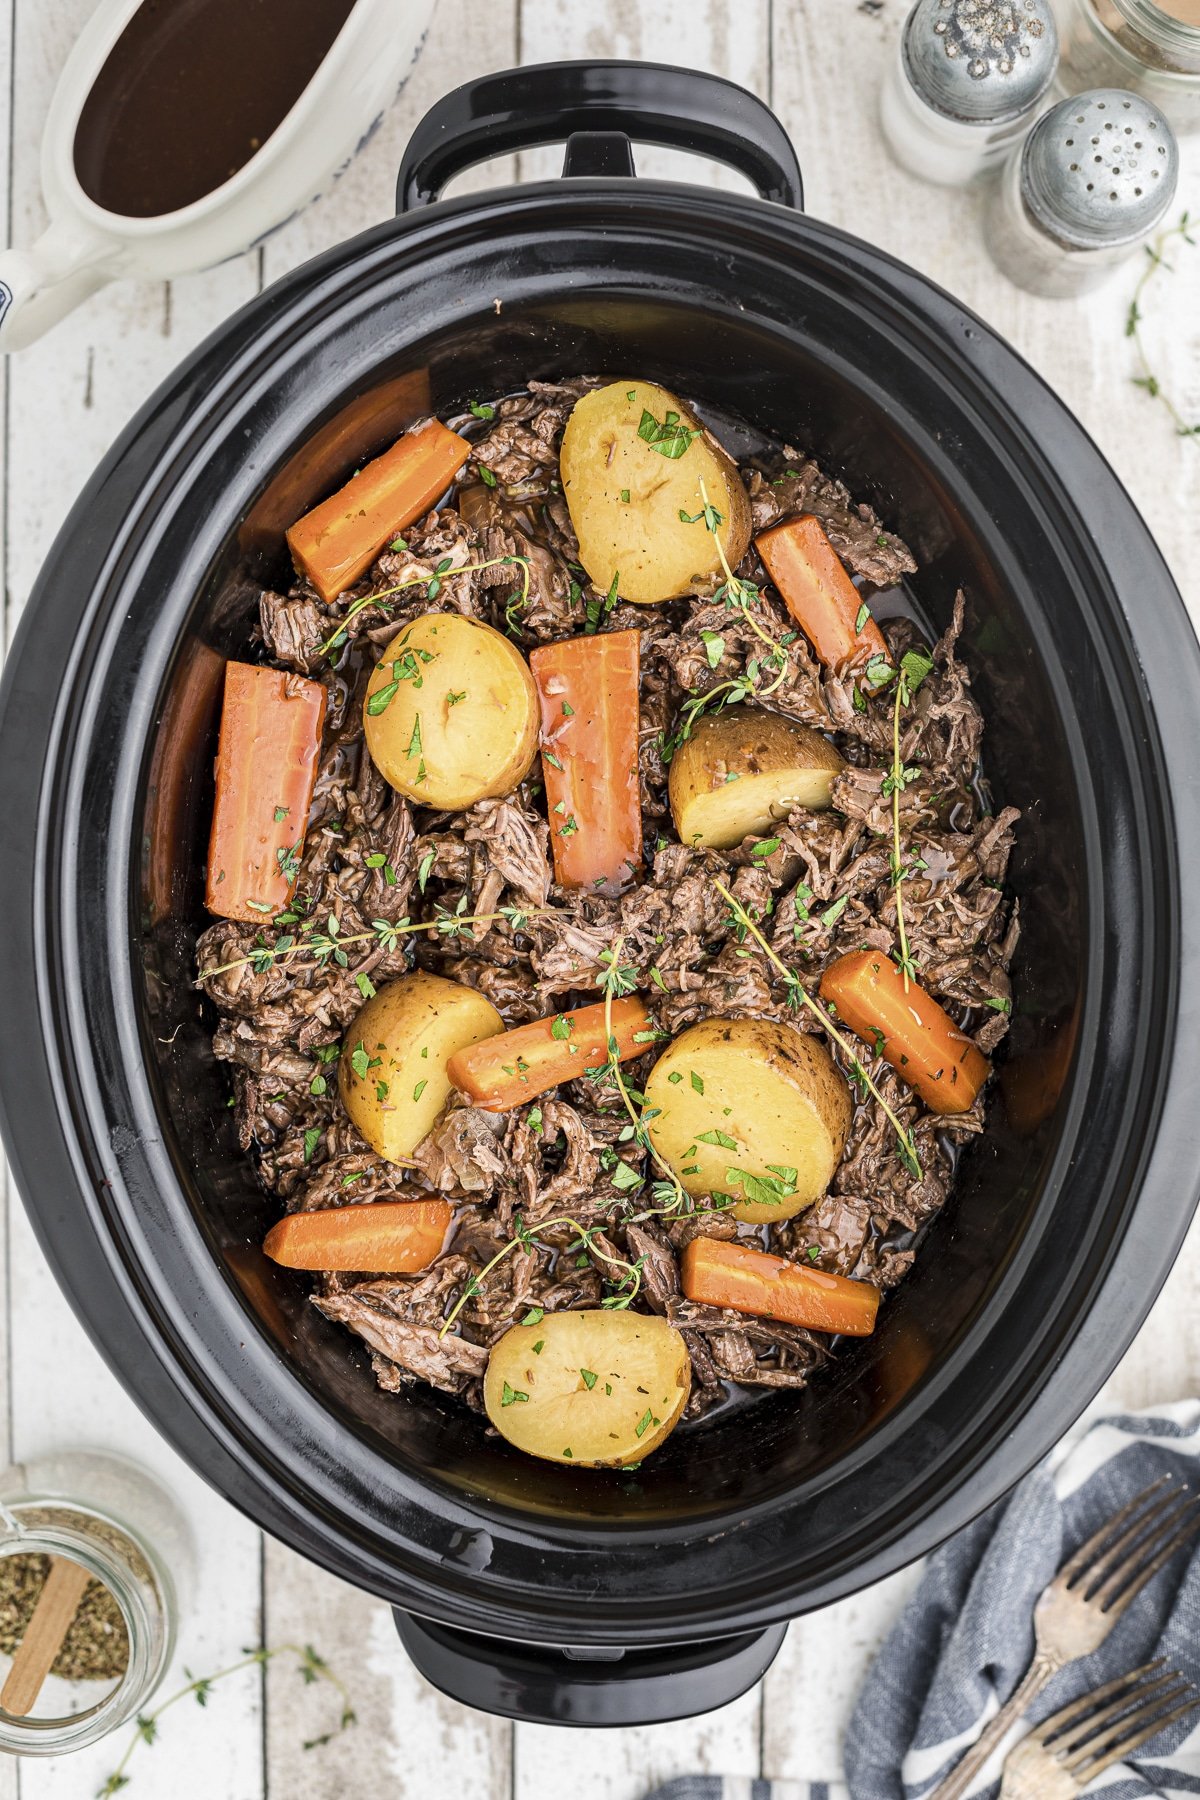 shredded venison roast and veggies in slow cooker.